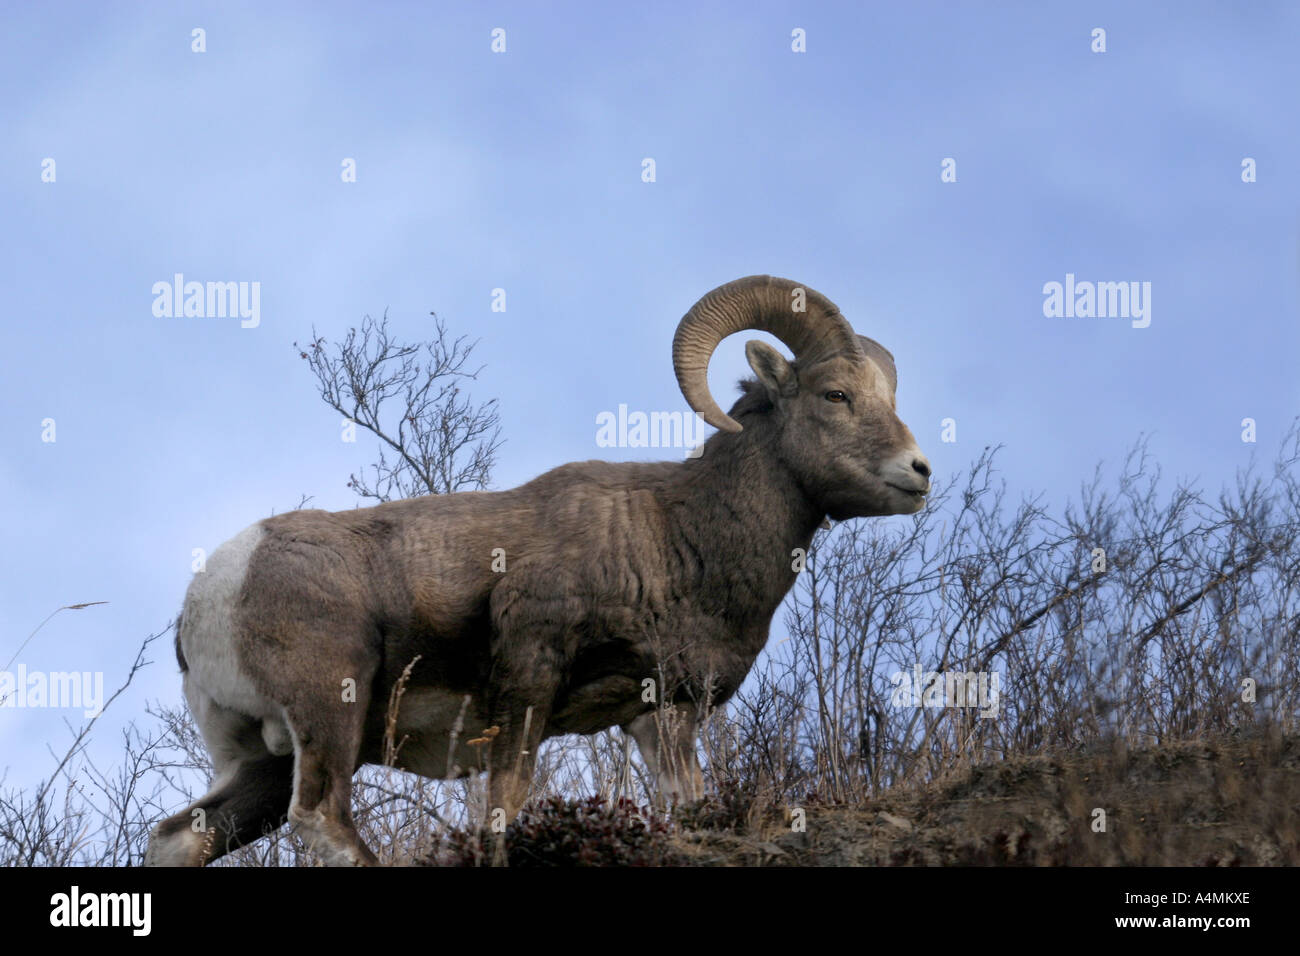 Big horn sheep; ovis canadensis Stock Photo